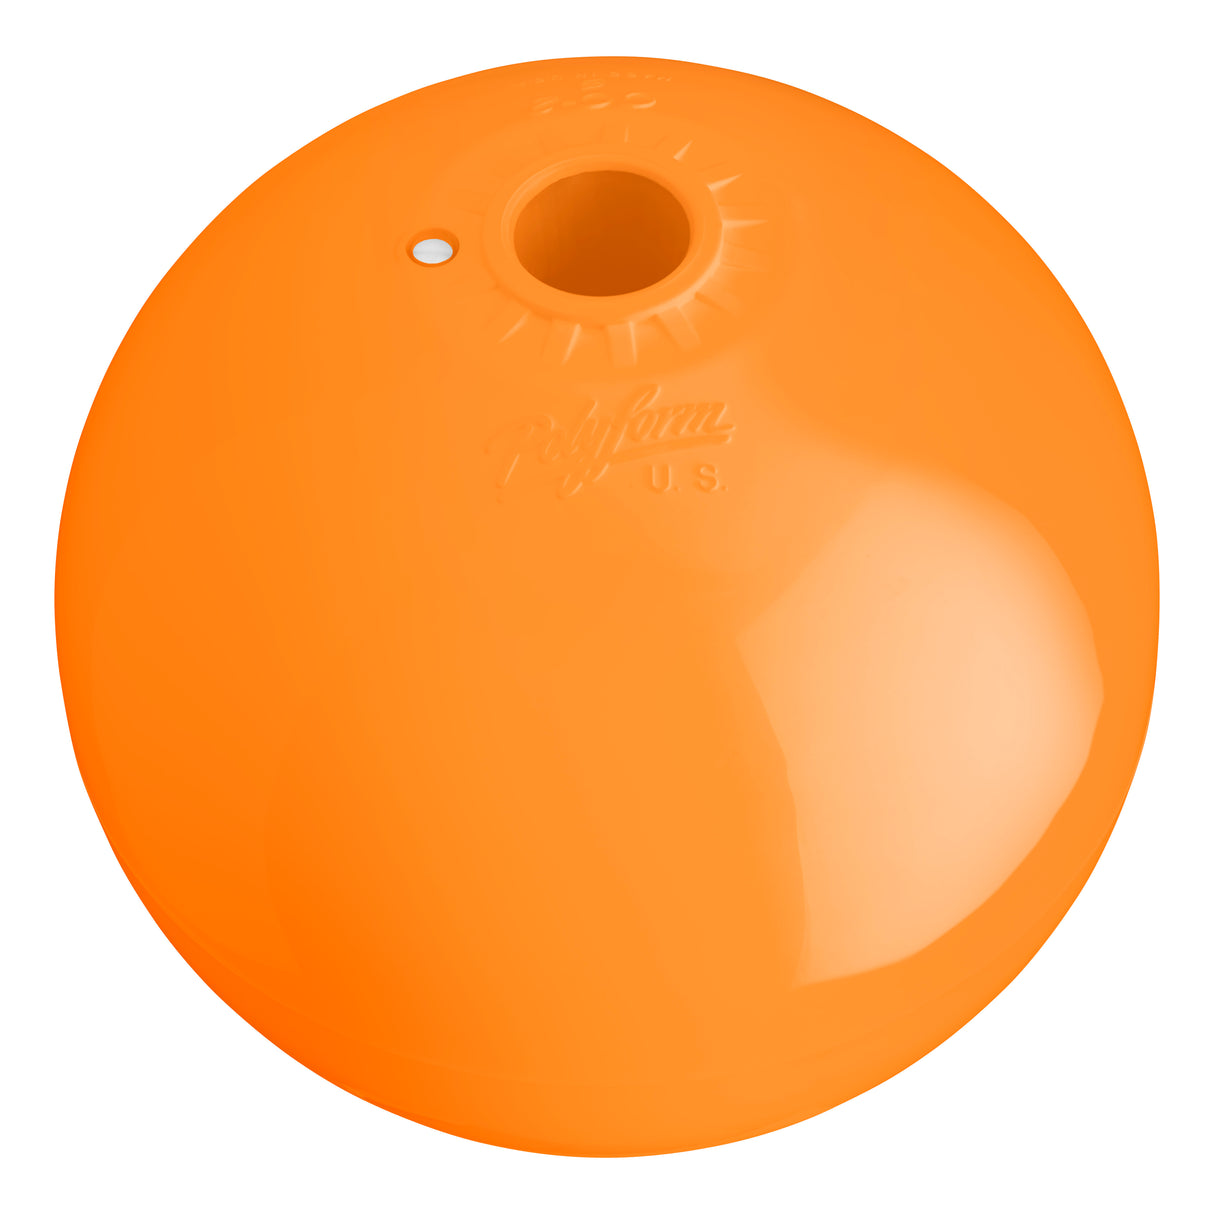 Hole through center mooring and marker buoy, Polyform CC-6 Orange angled shot